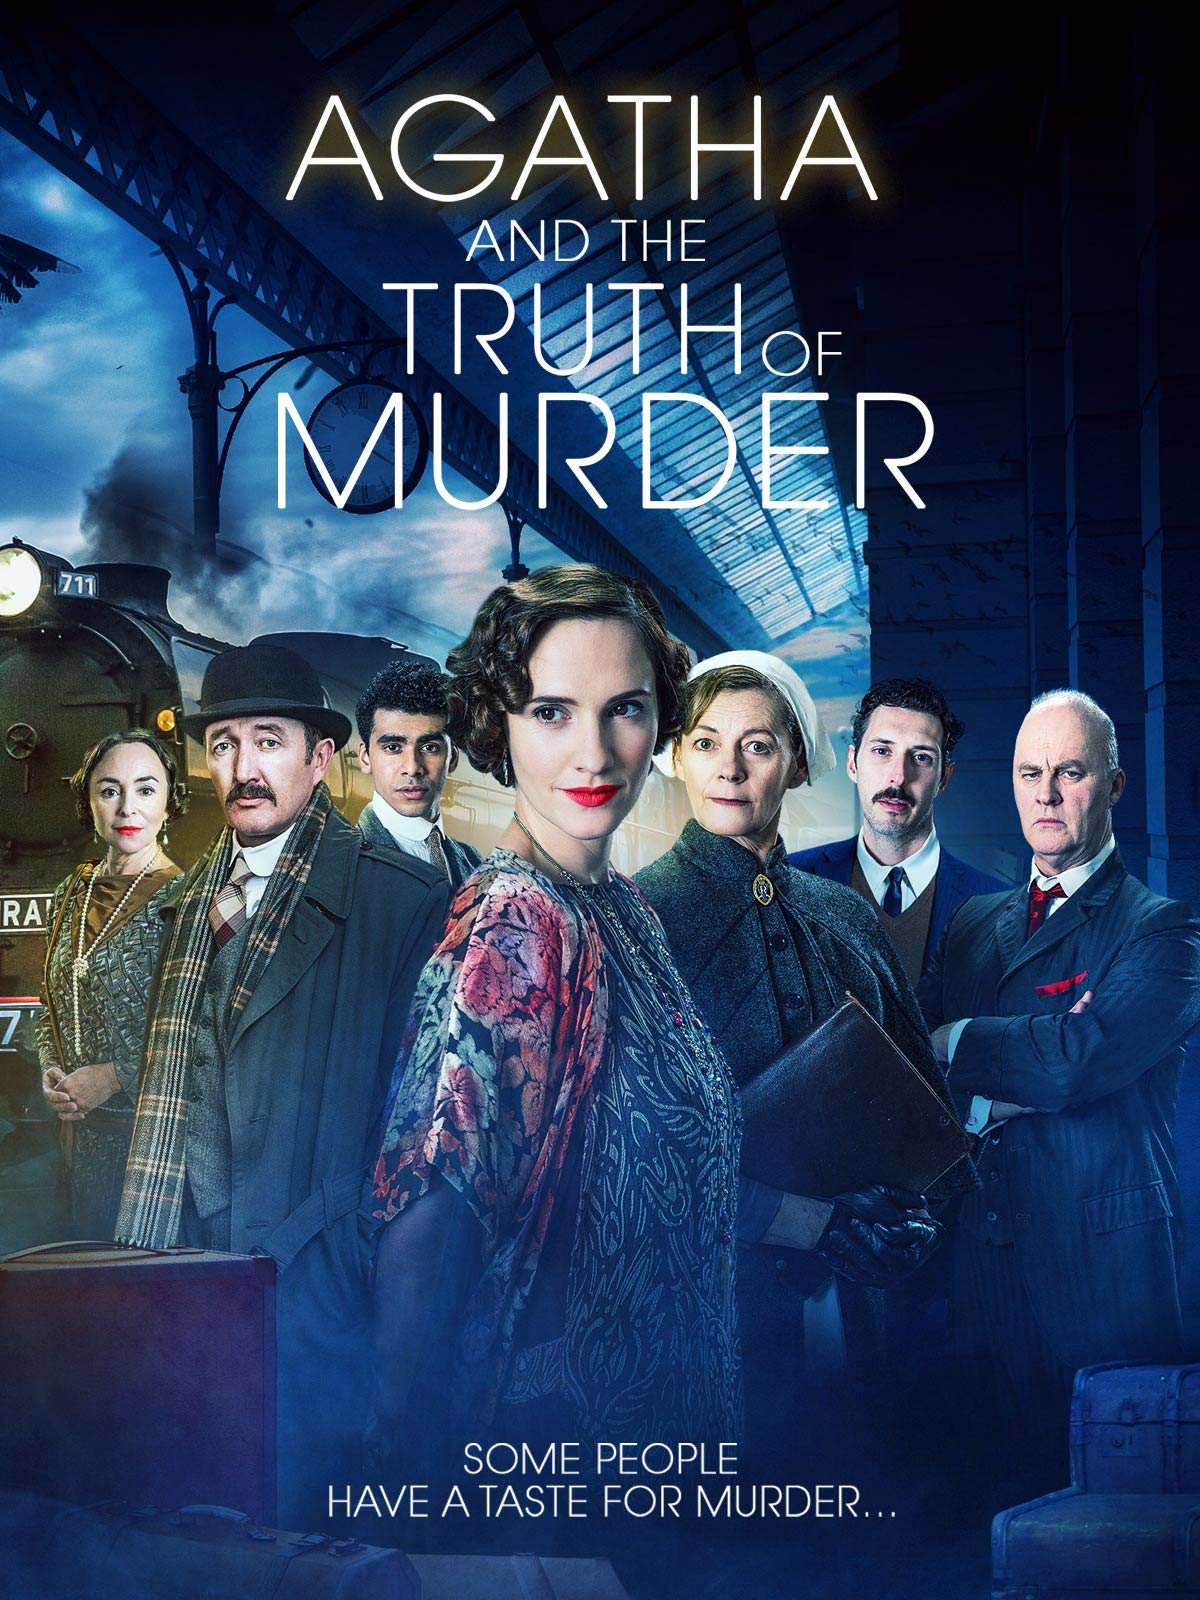 Nonton film Agatha and the Truth of Murder layarkaca21 indoxx1 ganool online streaming terbaru